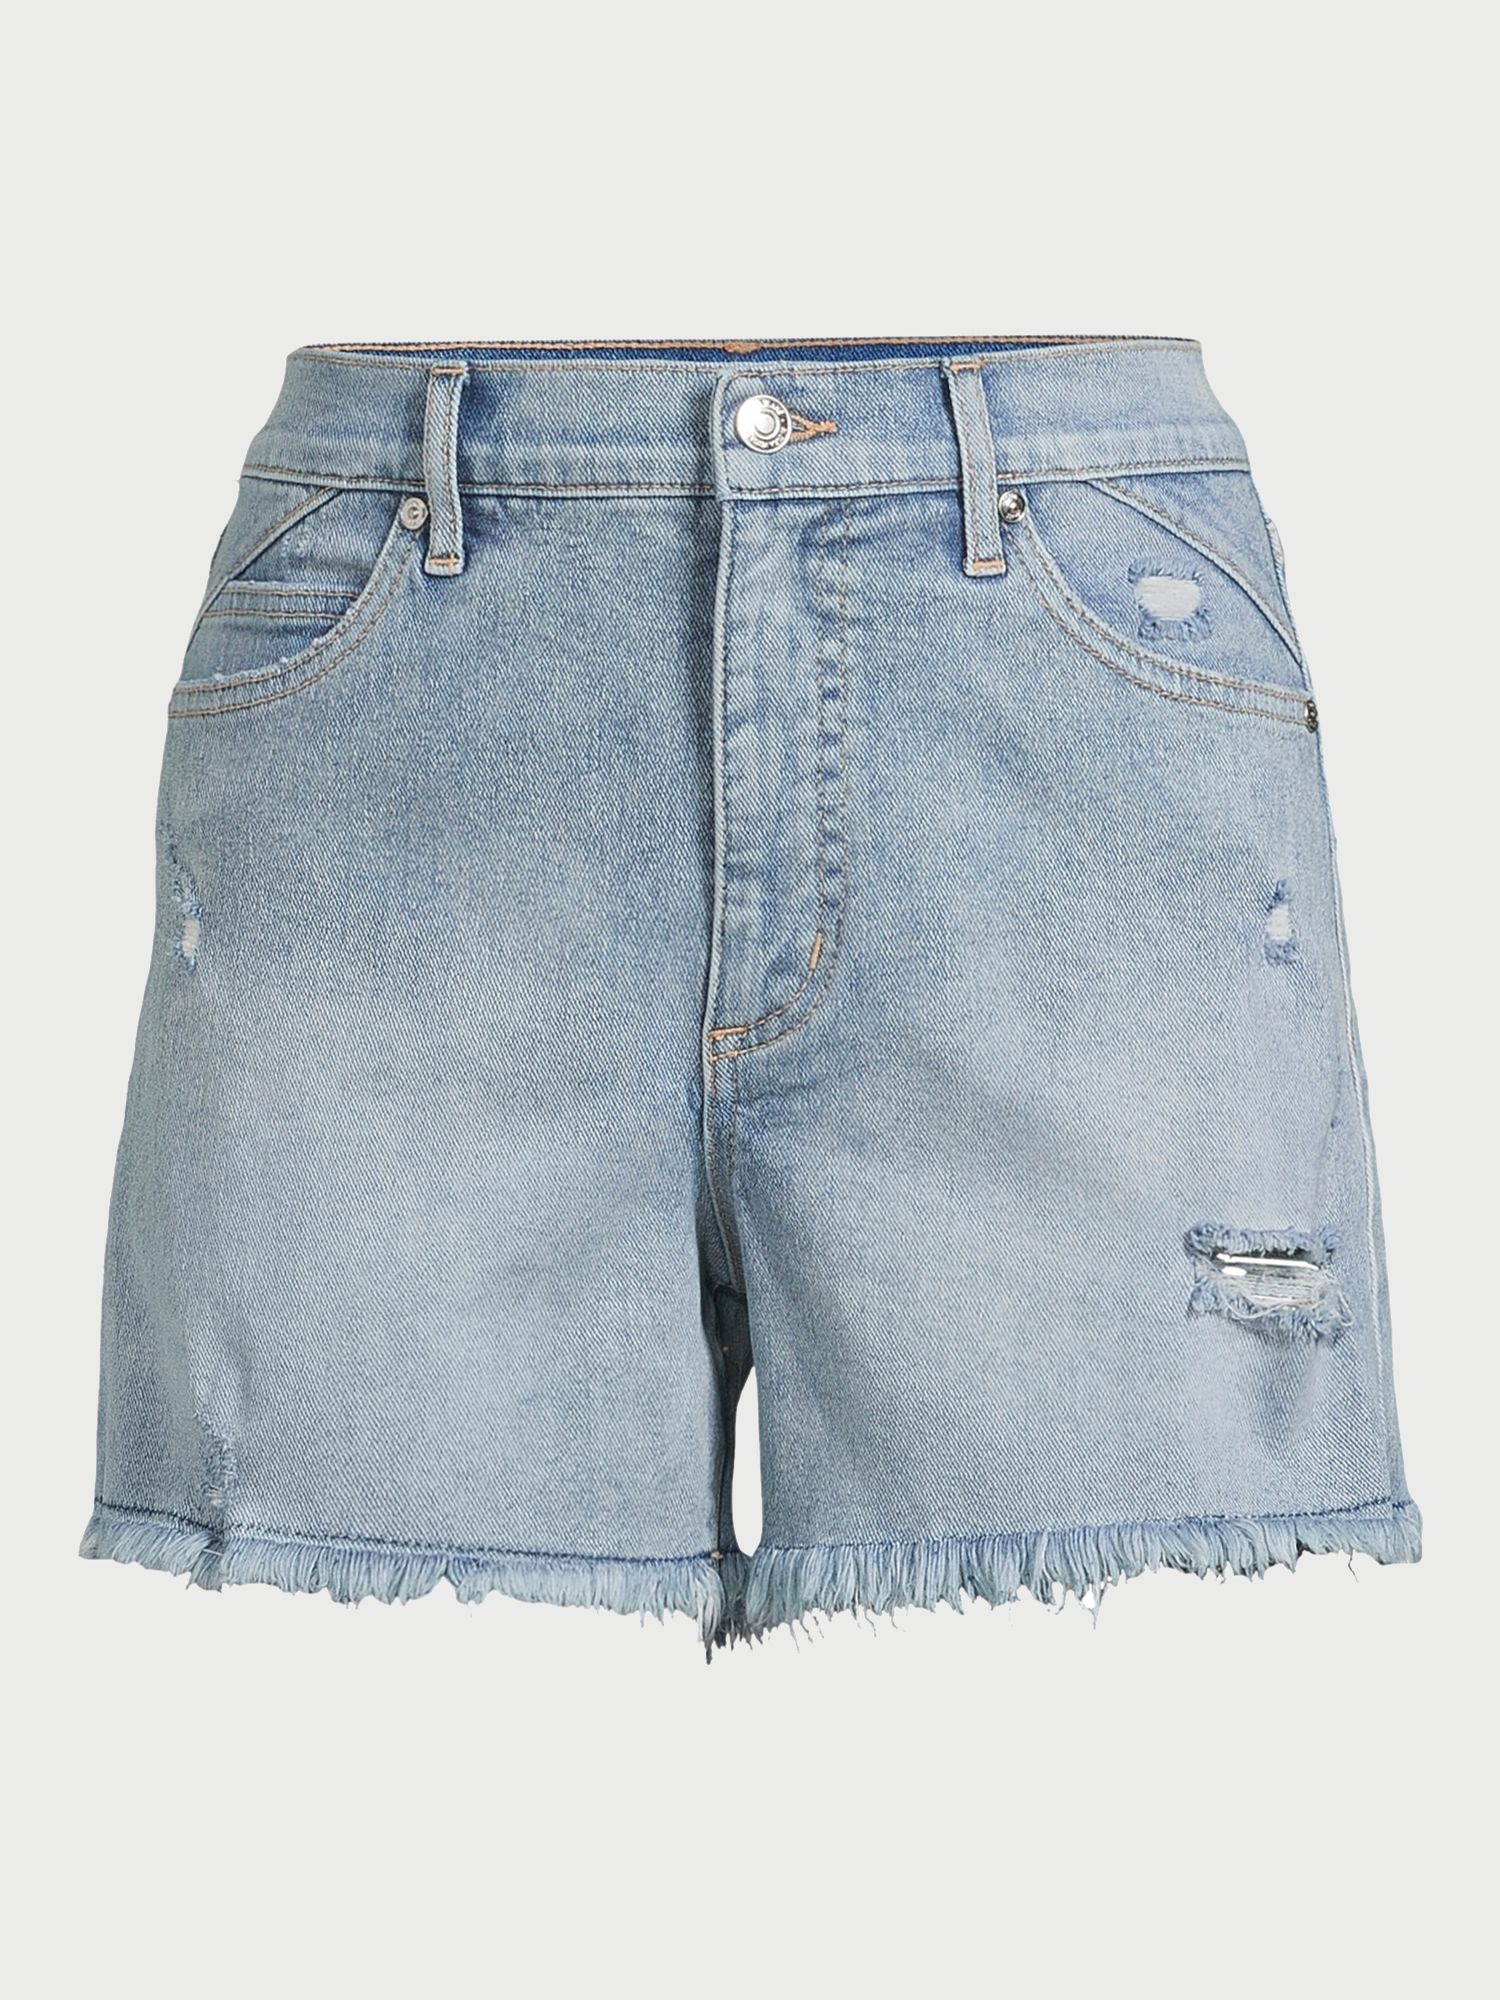 Sofia Jeans Women's Chi Shortie High Rise Fray Hem Shorts, 3.5" Inseam, Sizes 00-22 | Walmart (US)